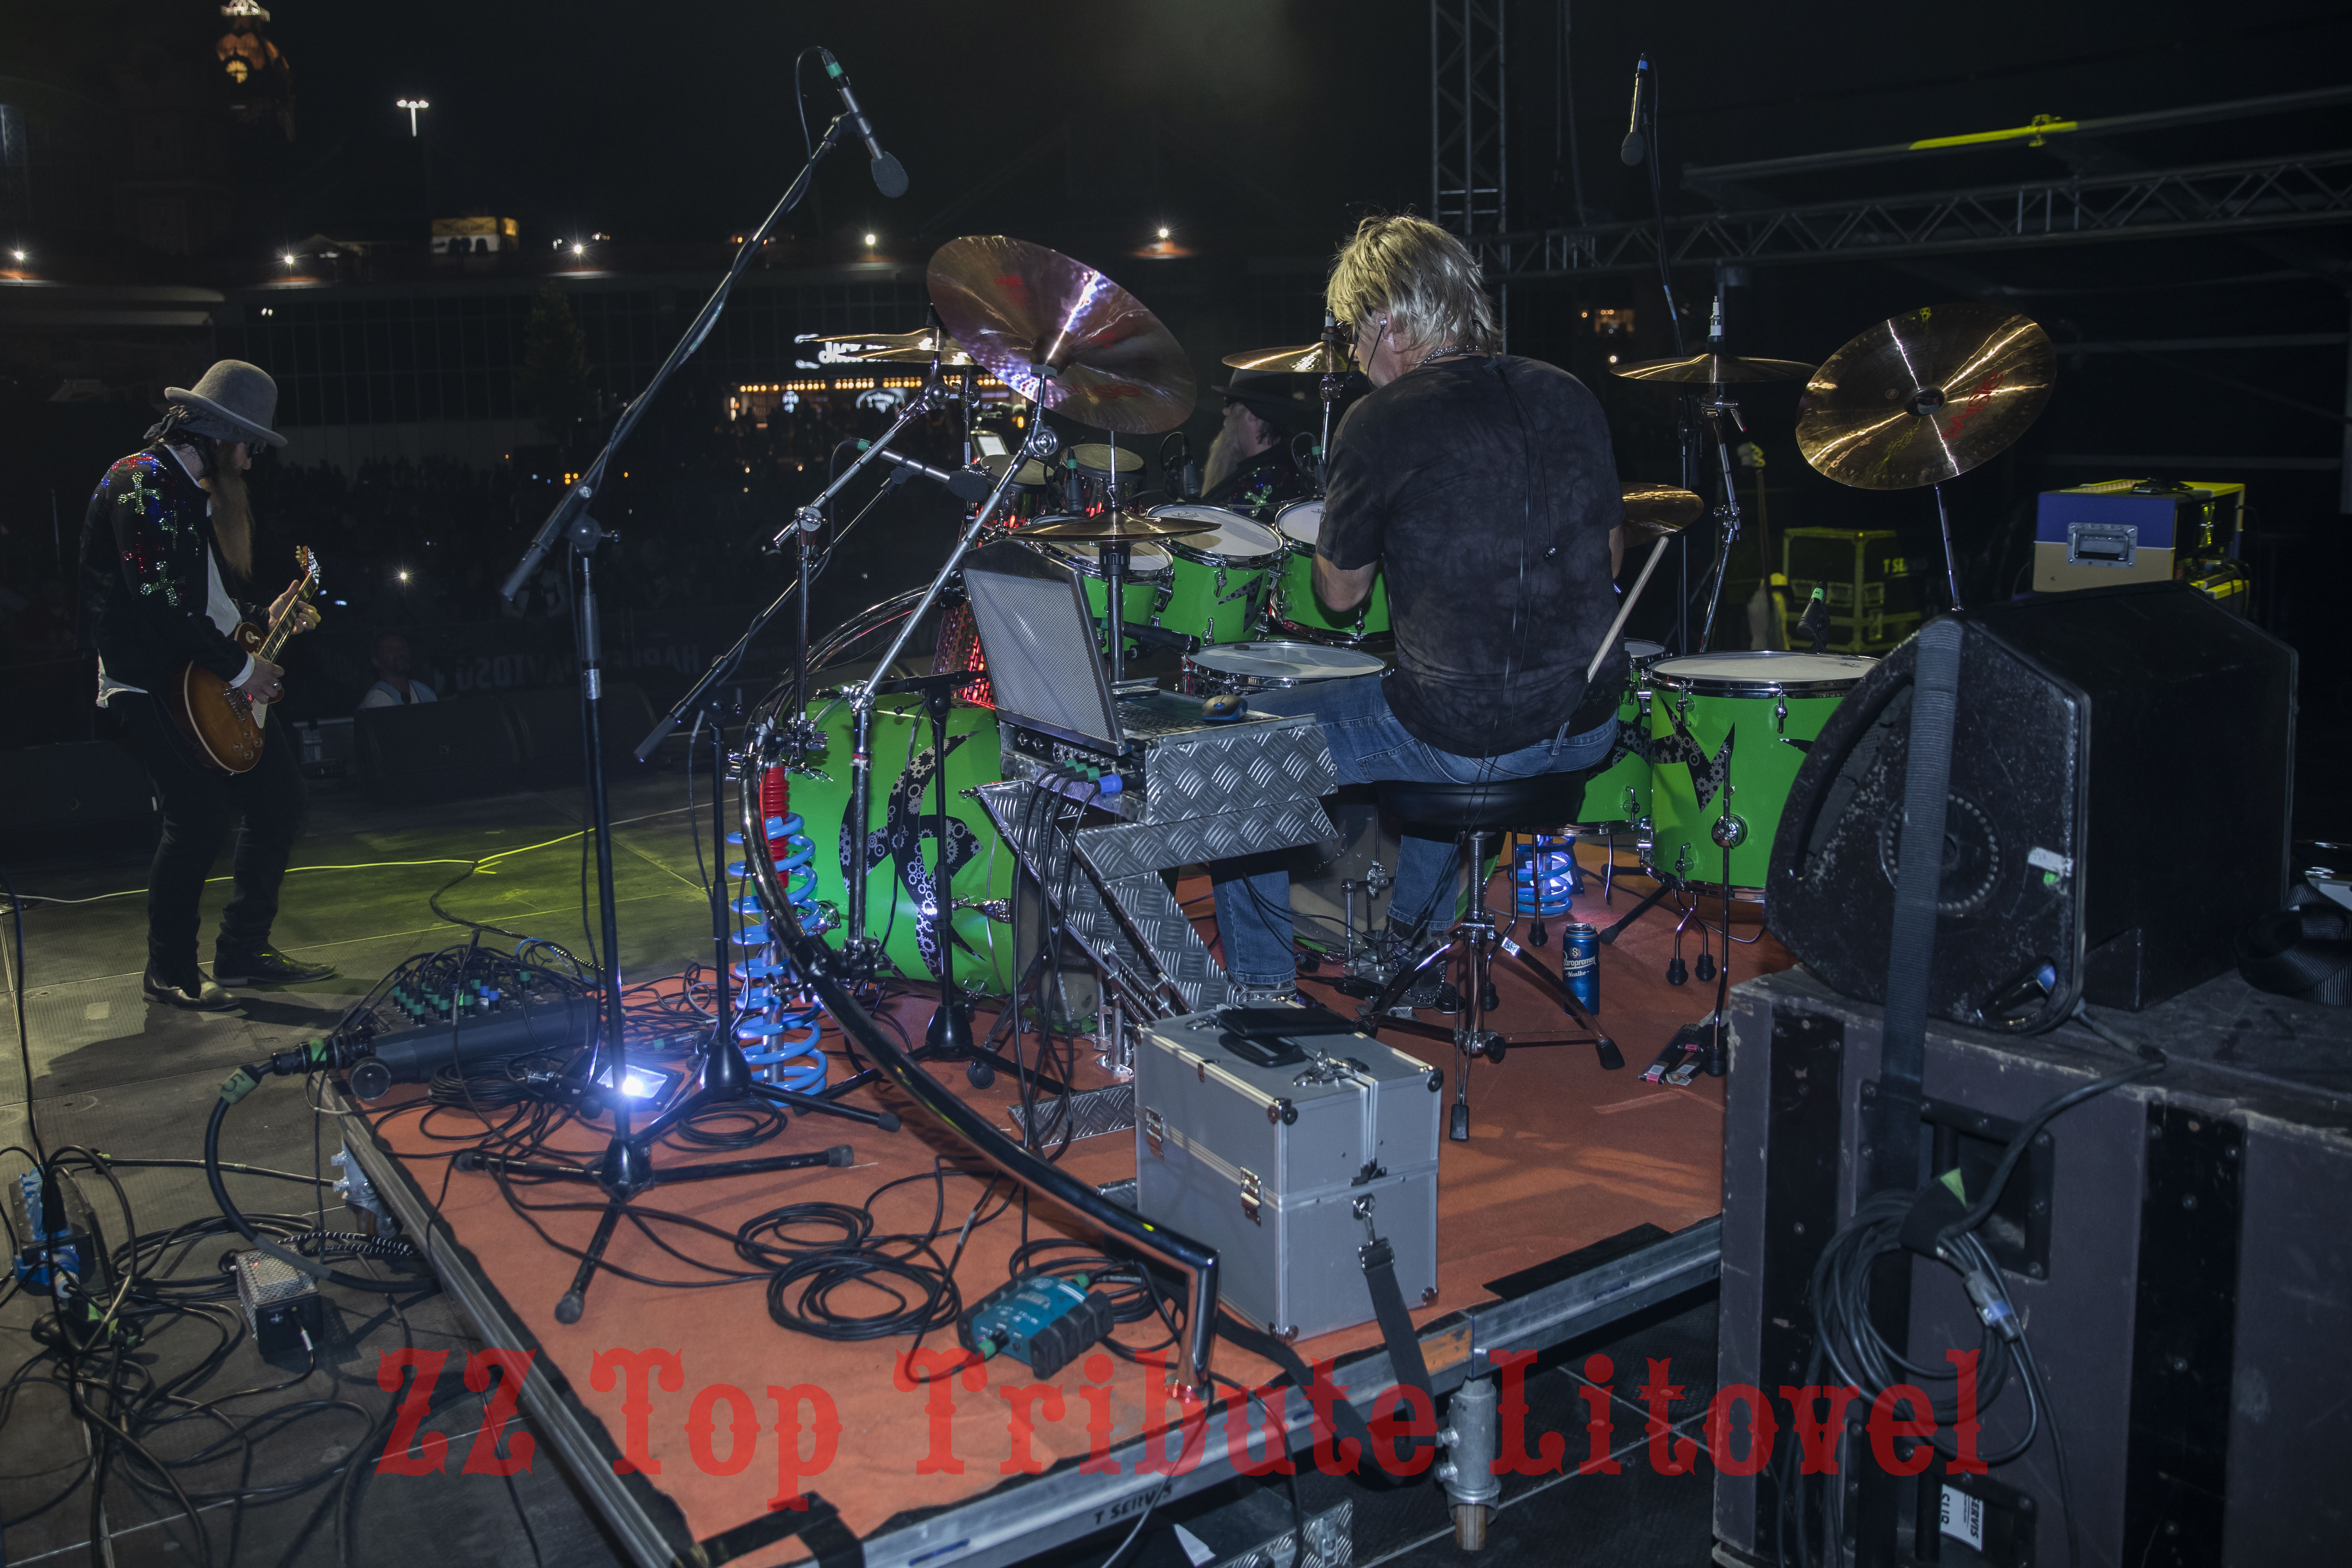 ZZ Top Revival-Tribute Litovel 112